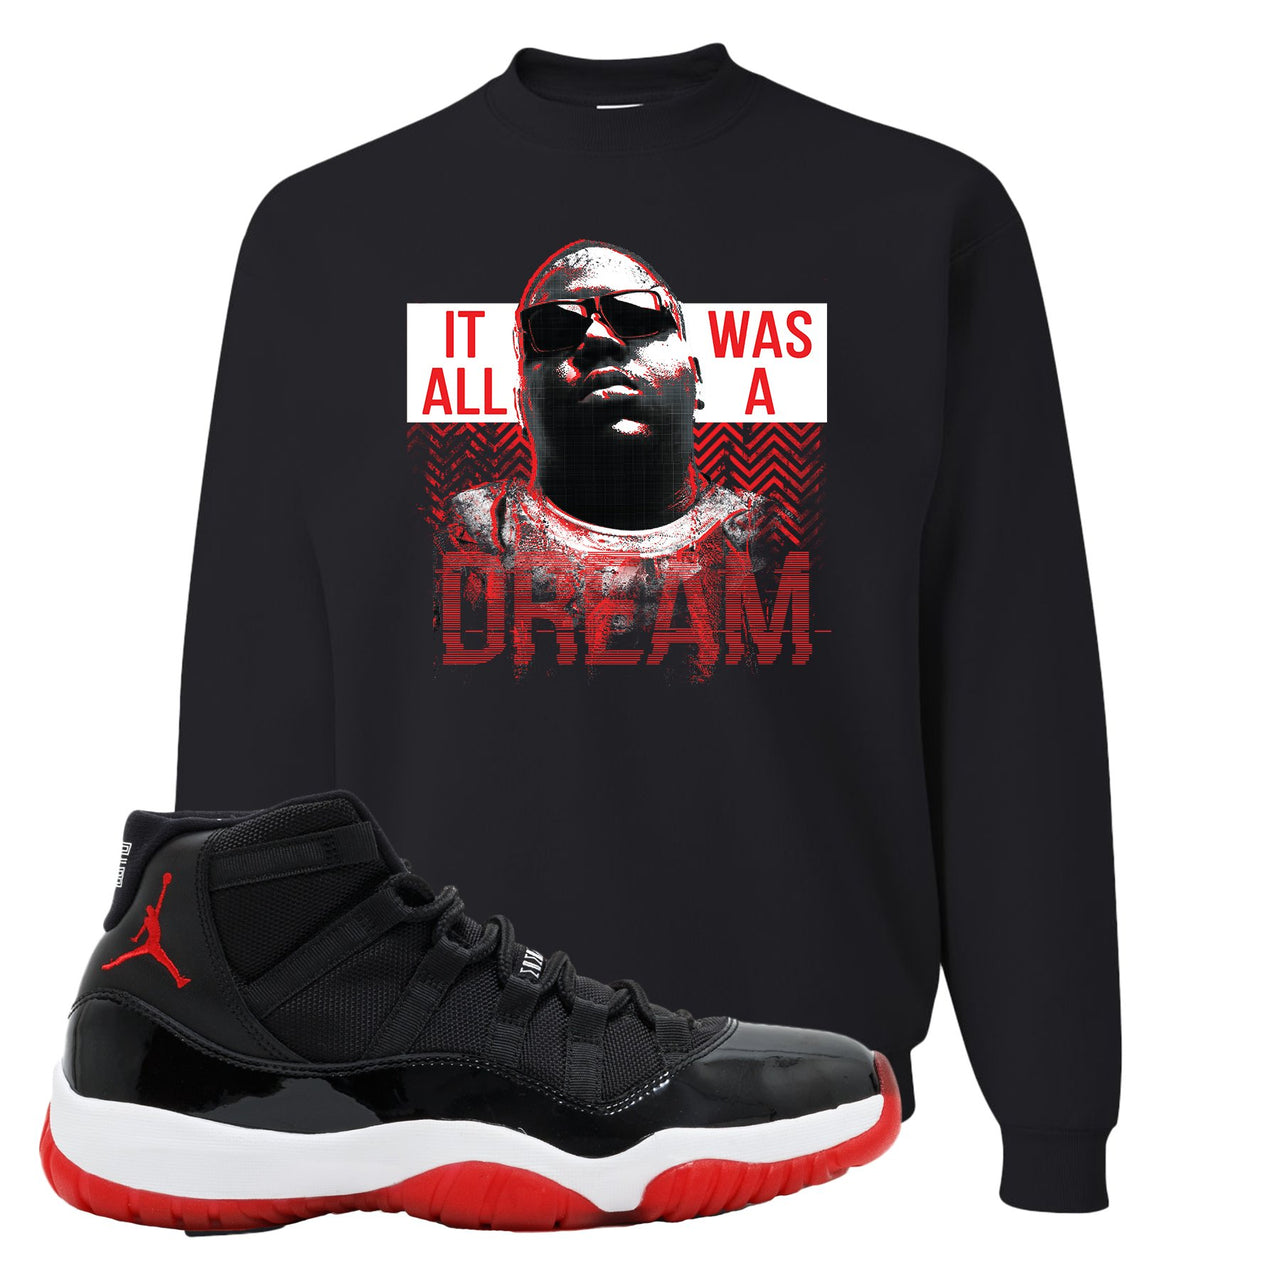 Jordan 11 Bred It Was All A Dream Black Sneaker Hook Up Crewneck Sweatshirt